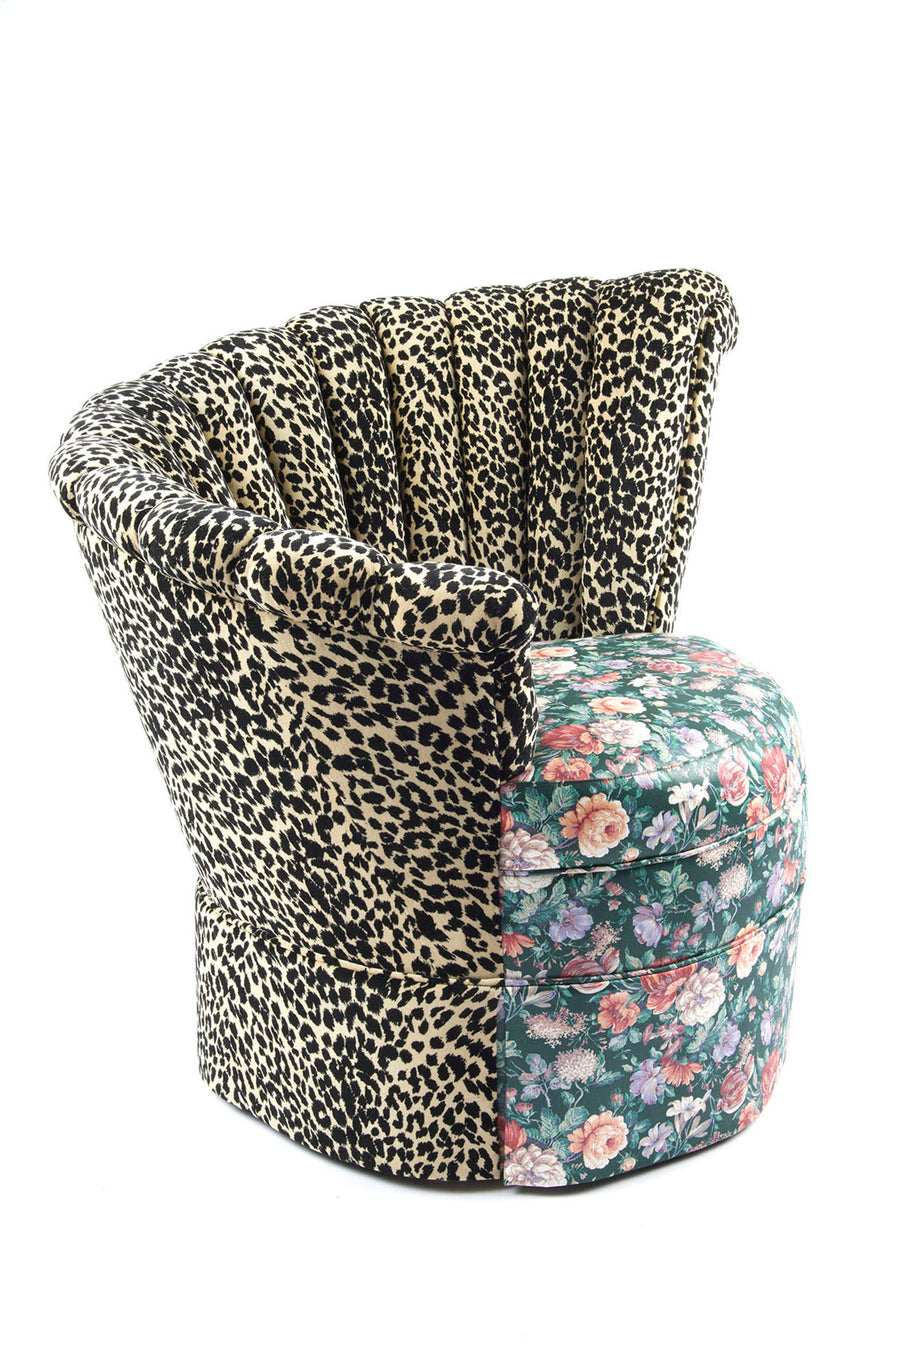 BATSHEVA - Nautilus Chair in Vintage Floral and Leopard Velvet Fabric